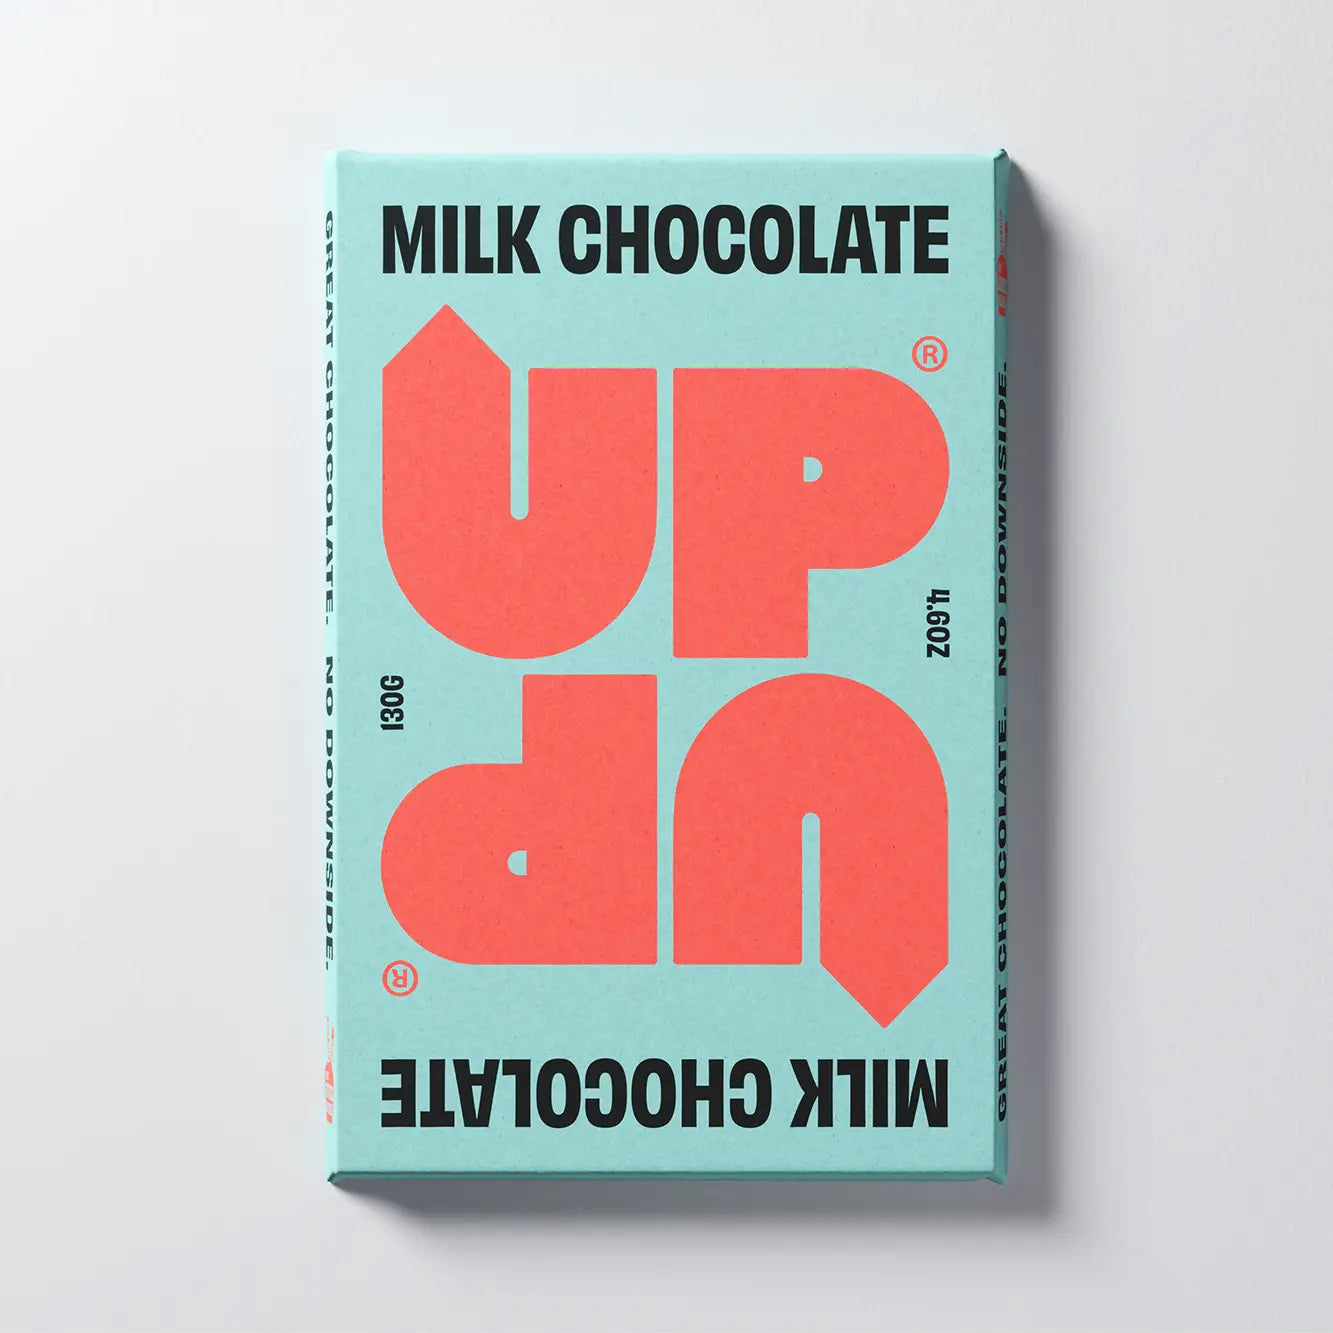 ORIGINAL MILK CHOCOLATE BAR BY UP UP 130g